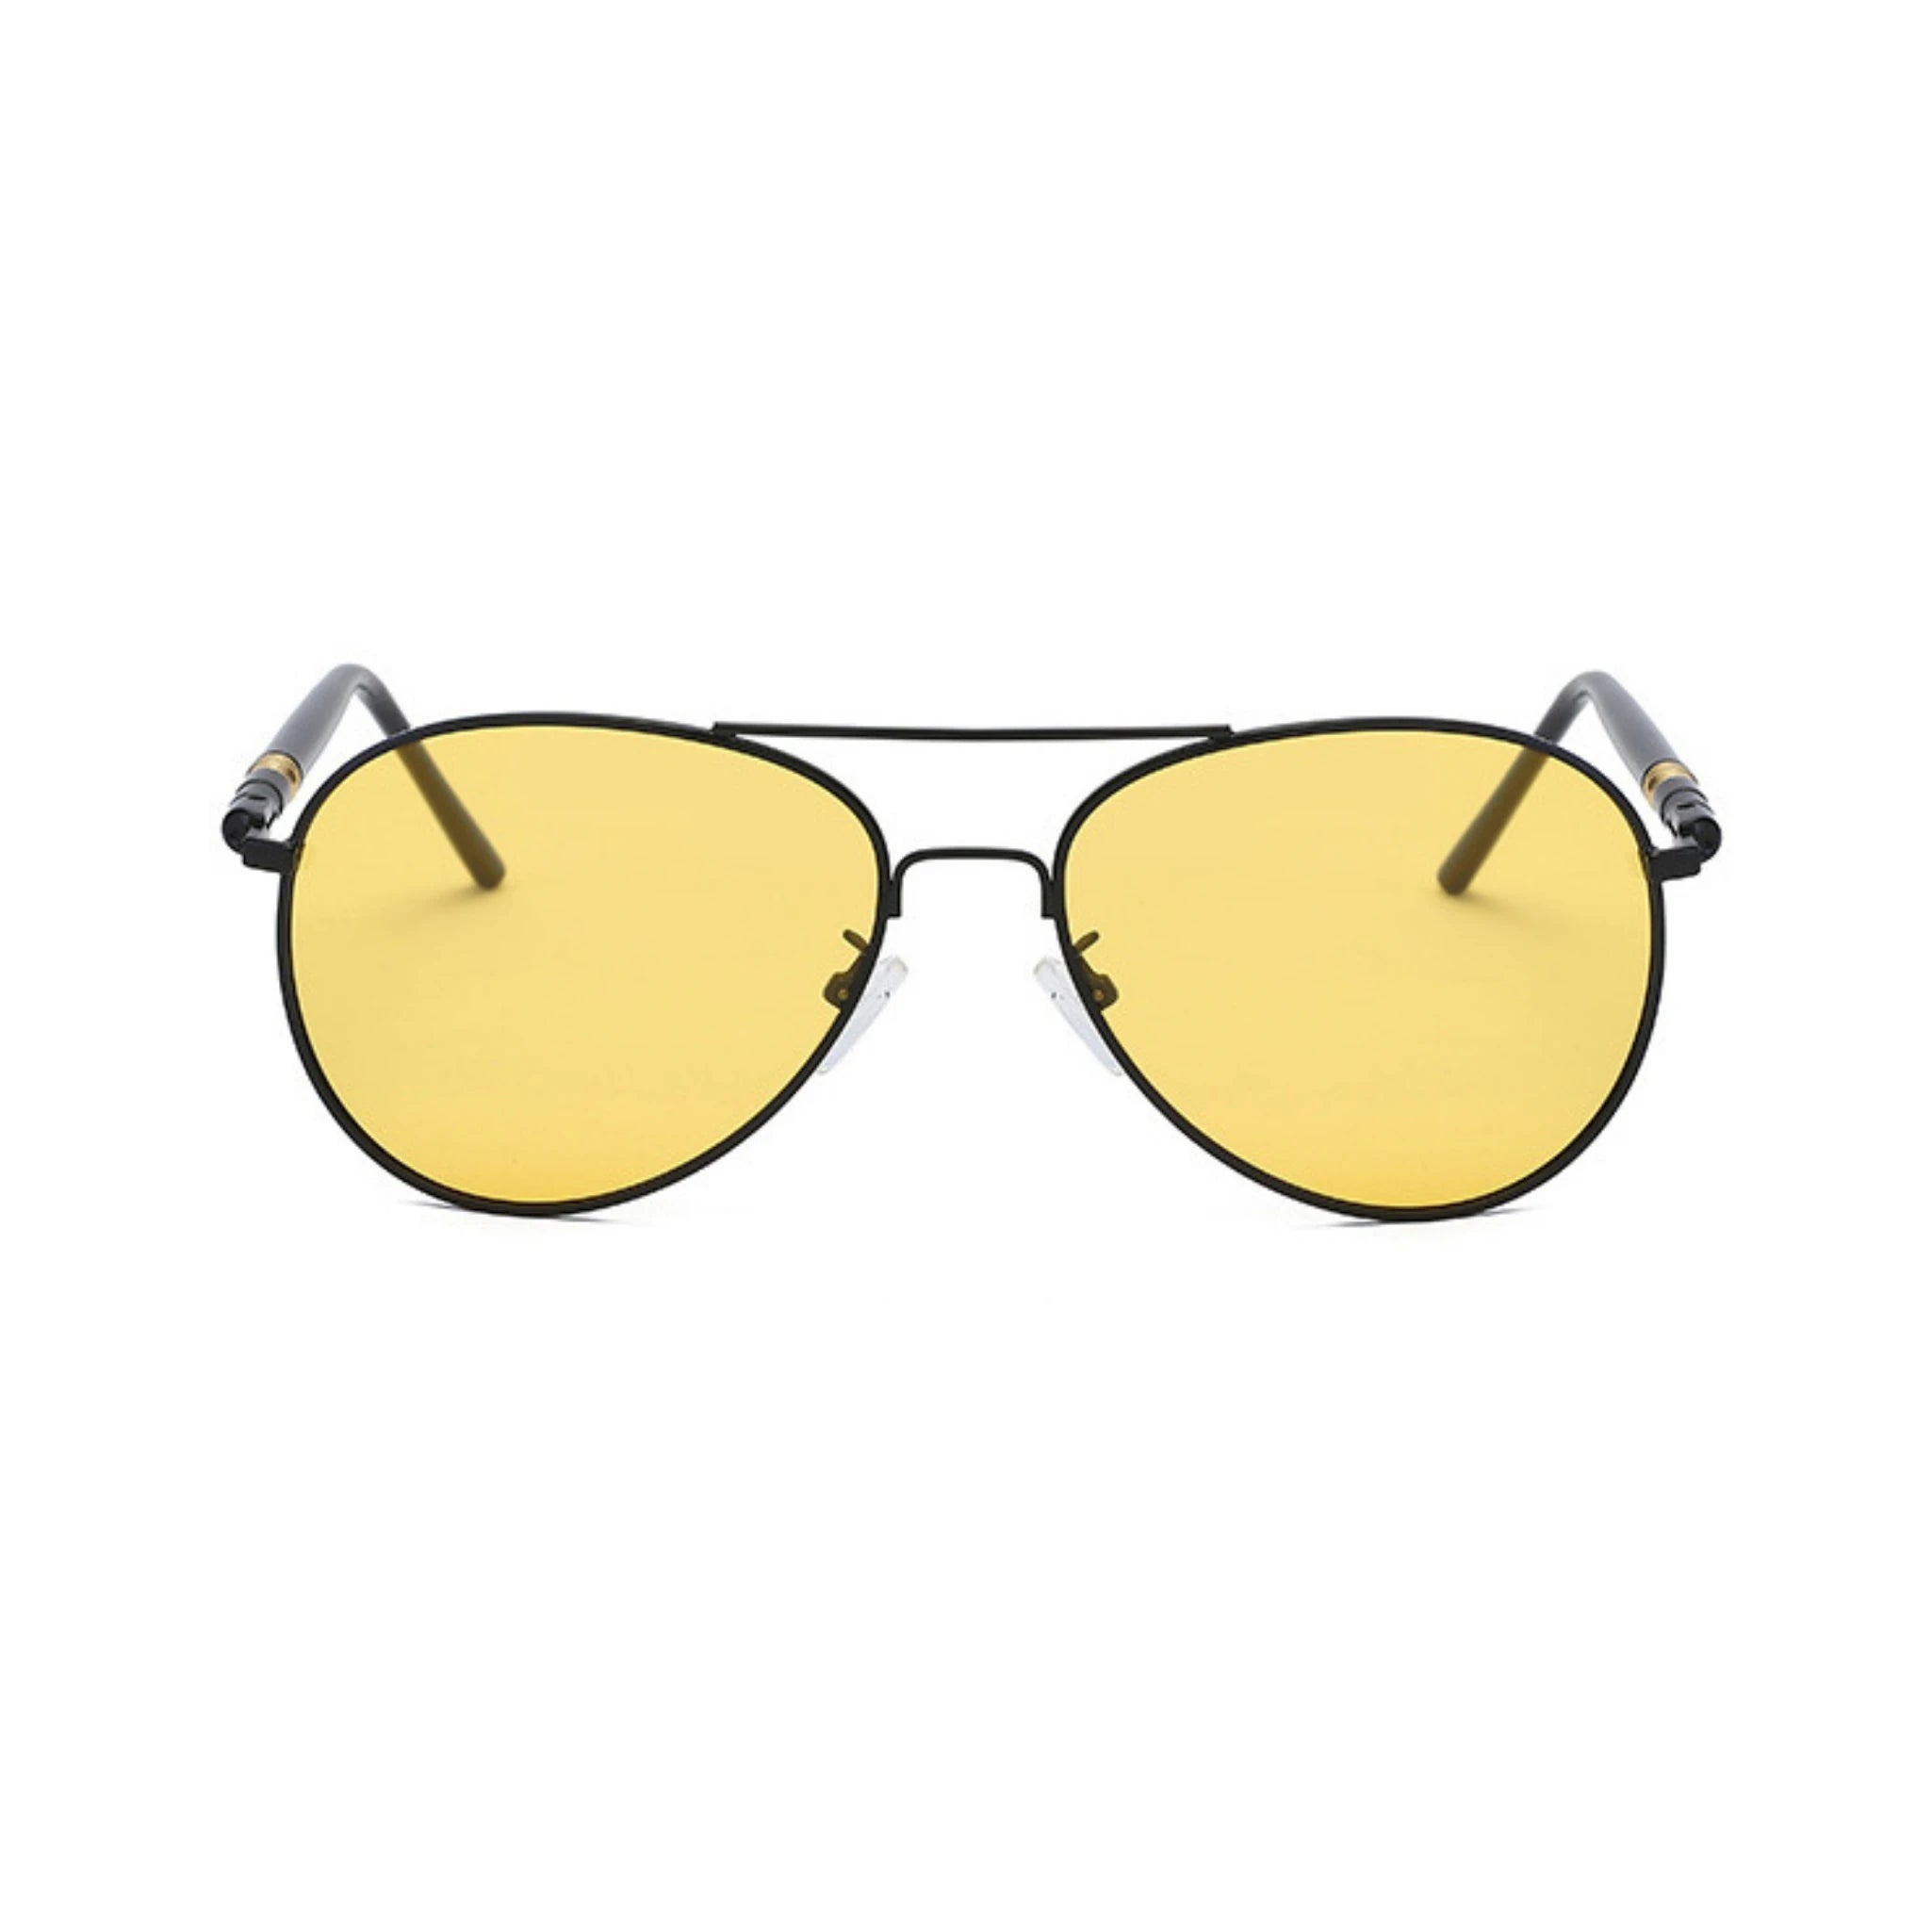 4Flaunt Klassic Series Aviator Polarized Night Driving Glasses For